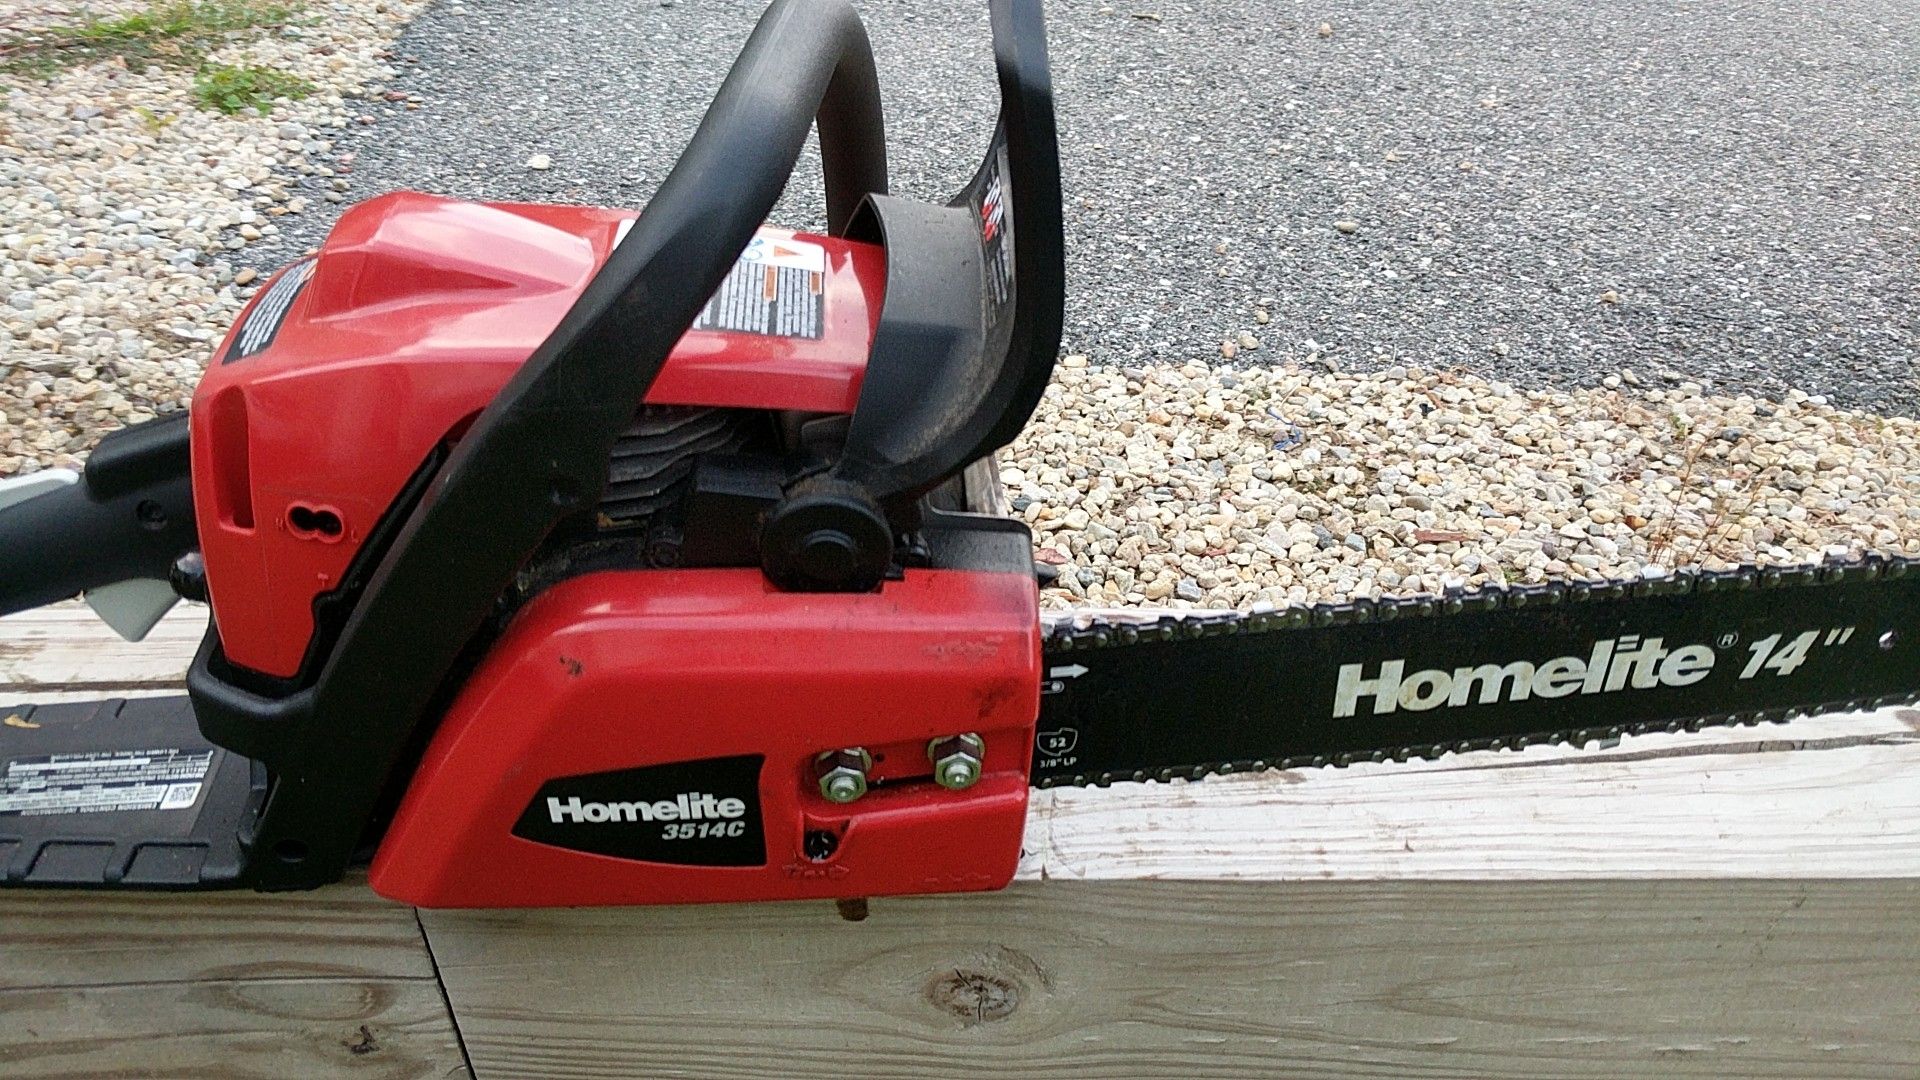 Homelite 14" gas chainsaw